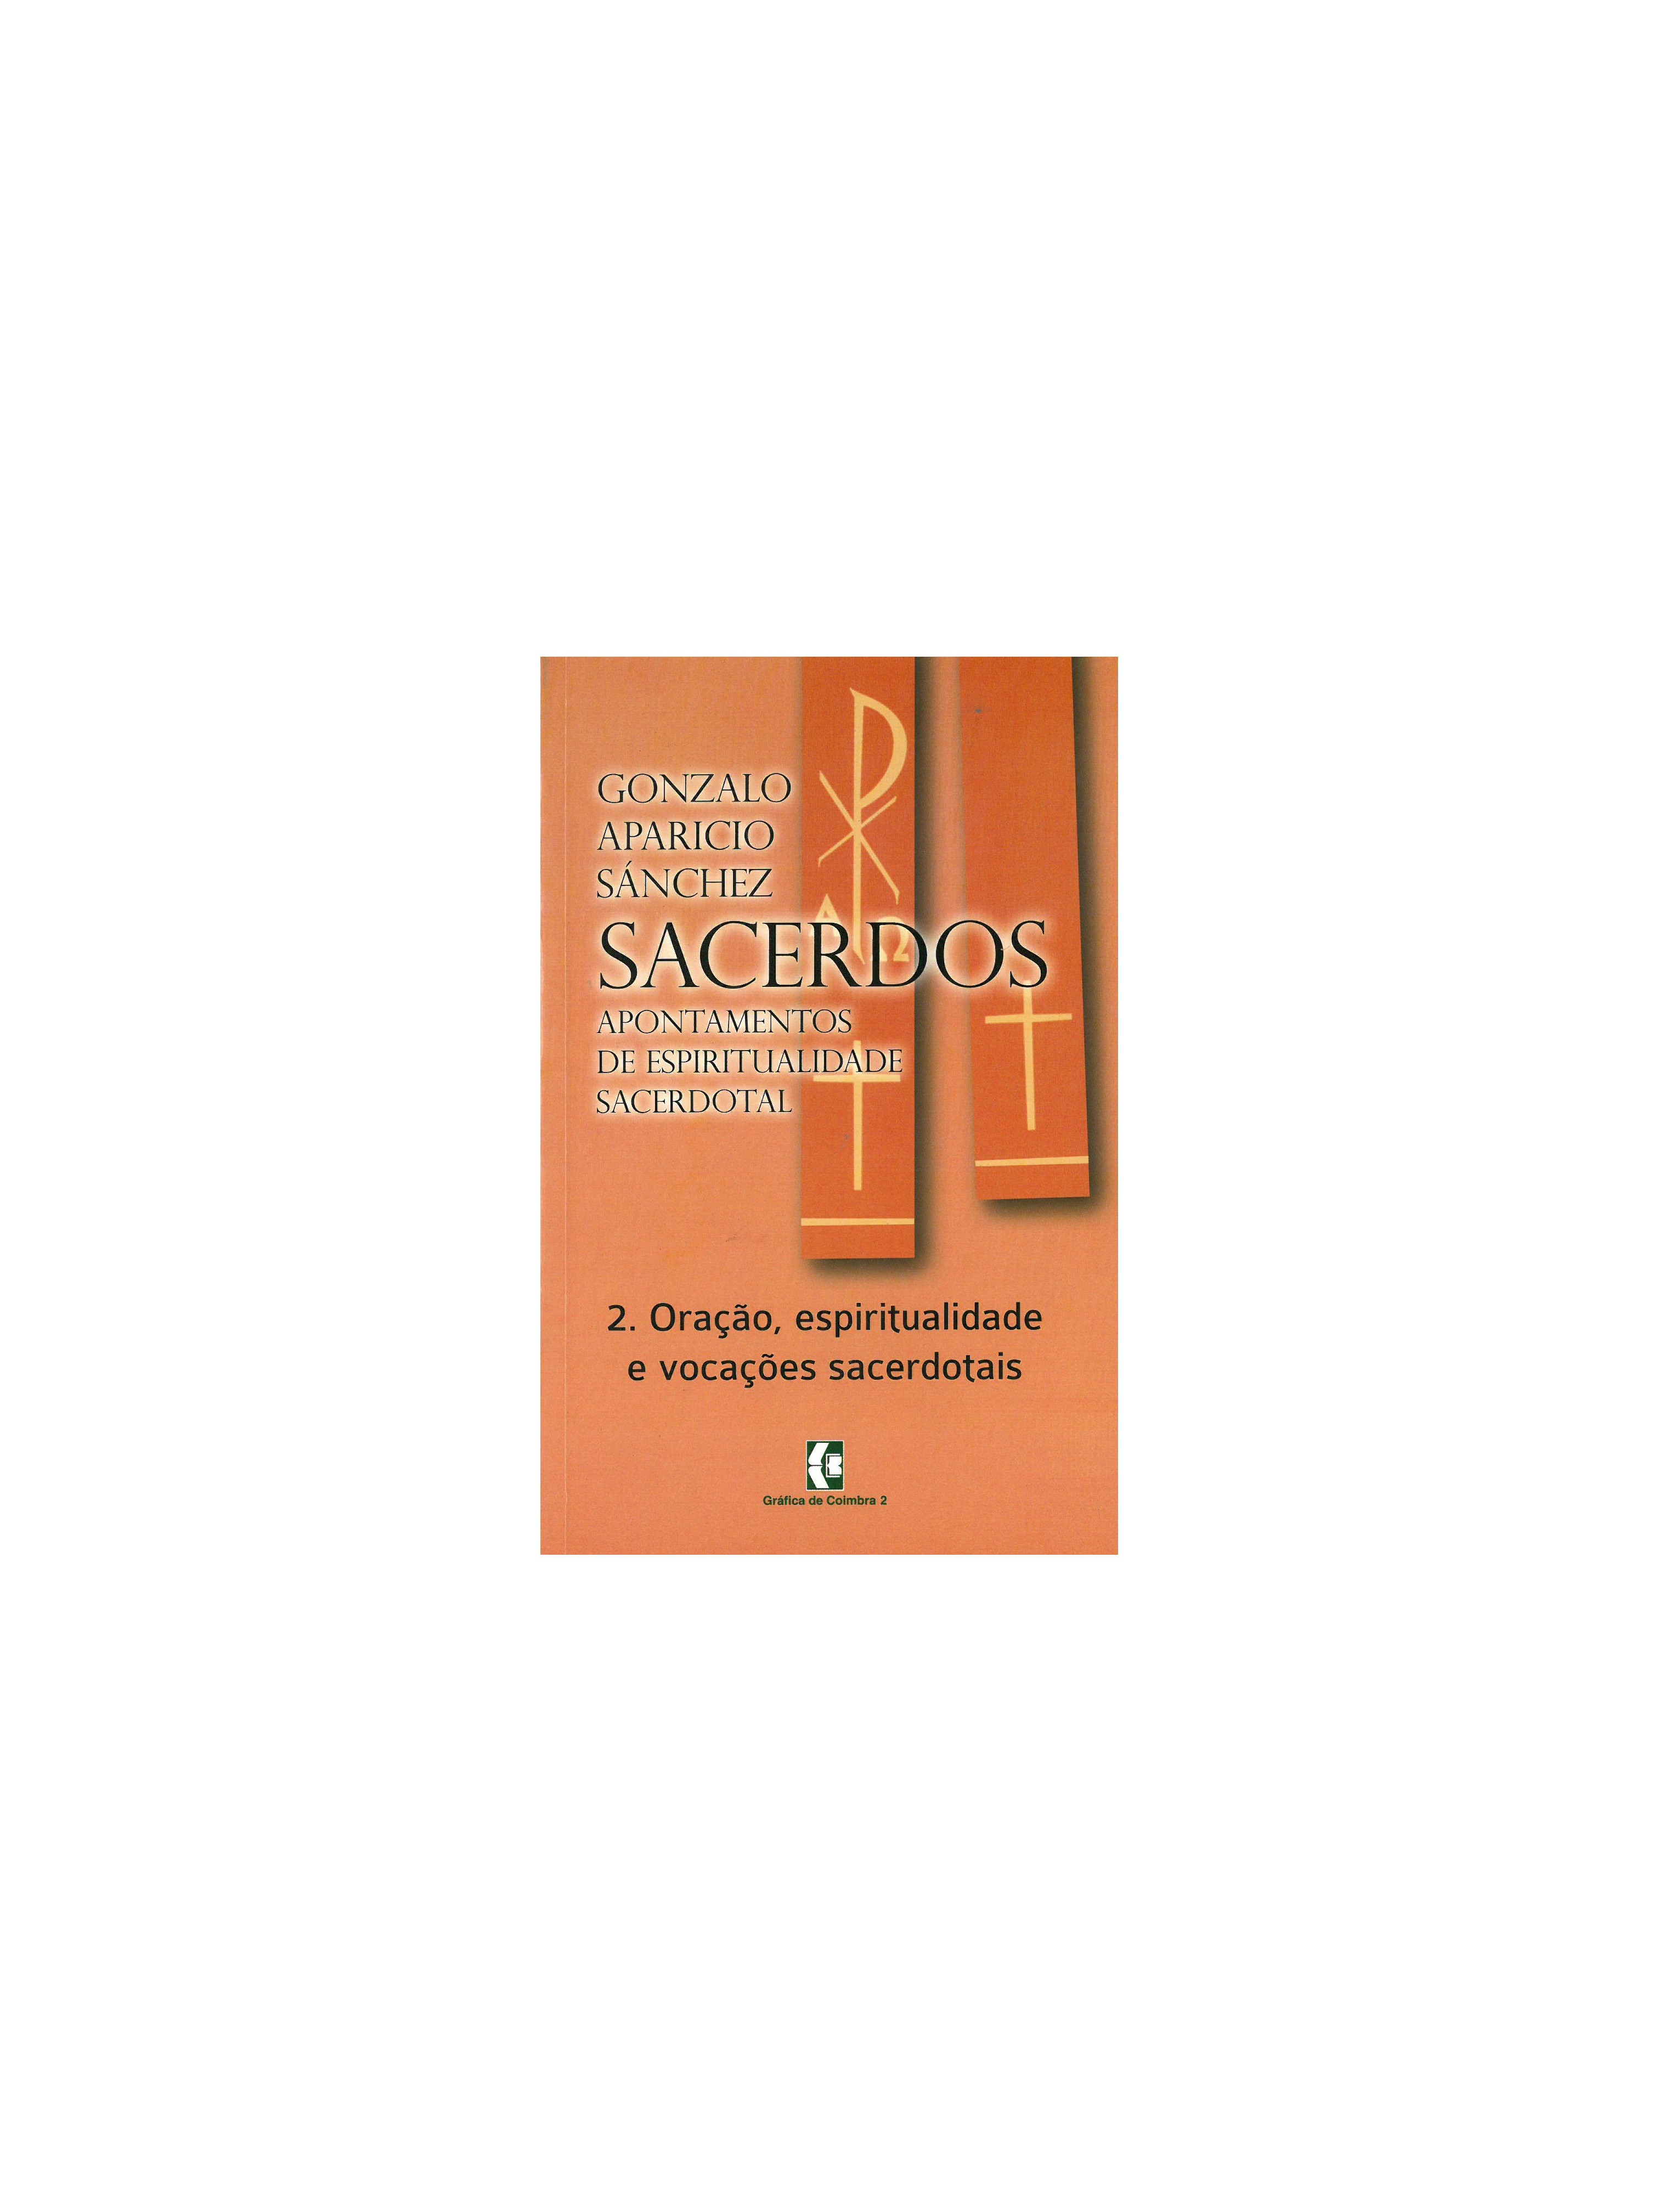 SACERDOS II – Apontamentos de espiritualidade sacerdotal